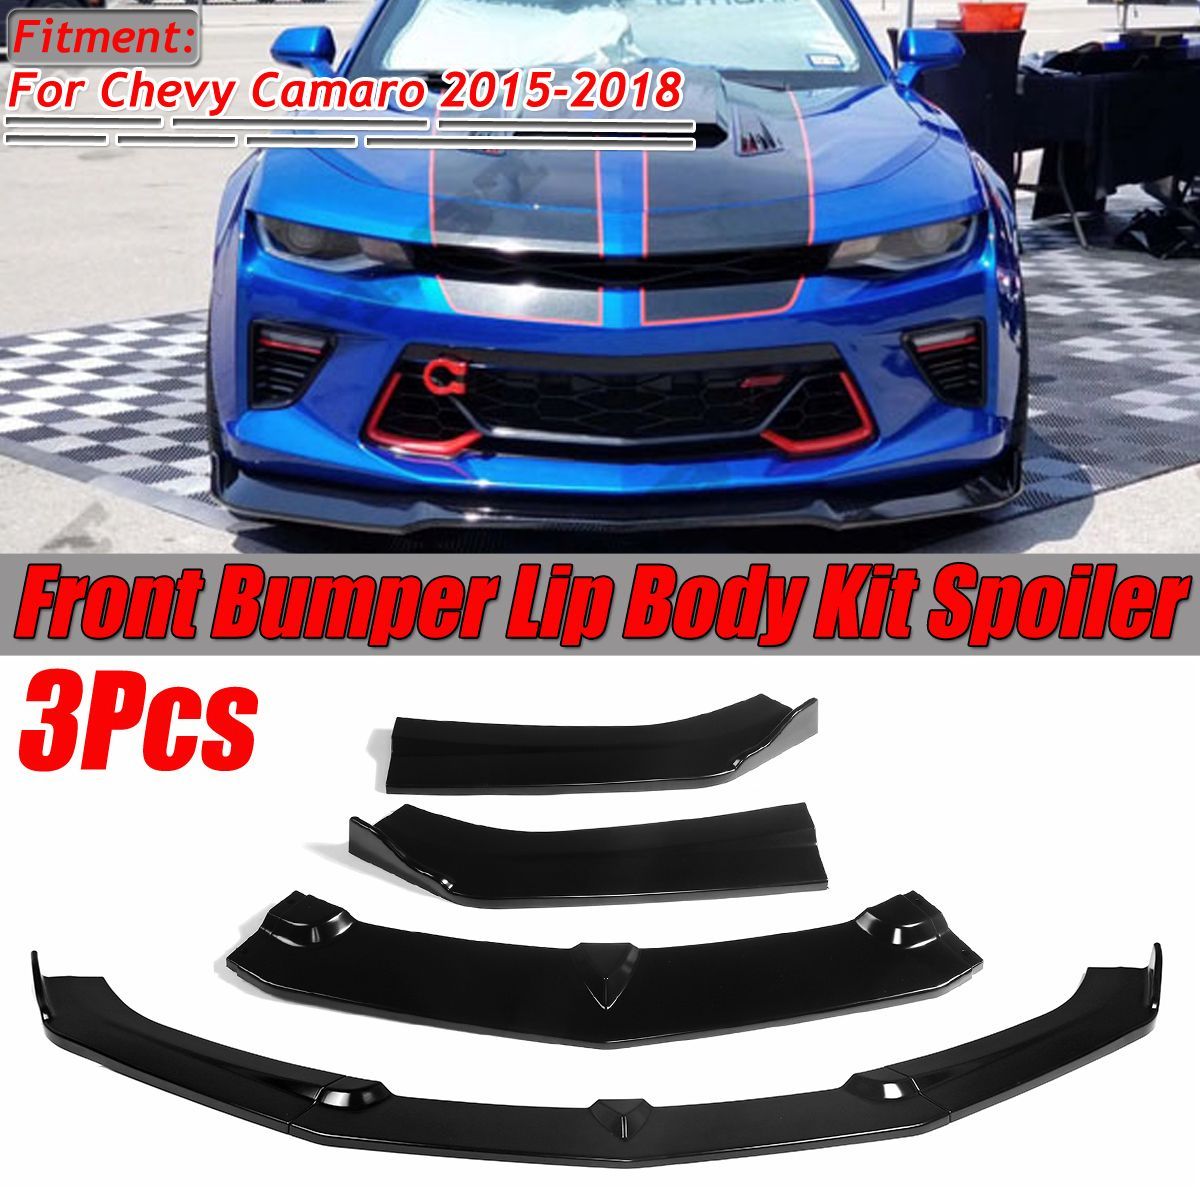 Glossy-Black-Front-Bumper-Lip-Body-Kit-Spoiler-For-Chevy-Camaro-2015-2018-1722487